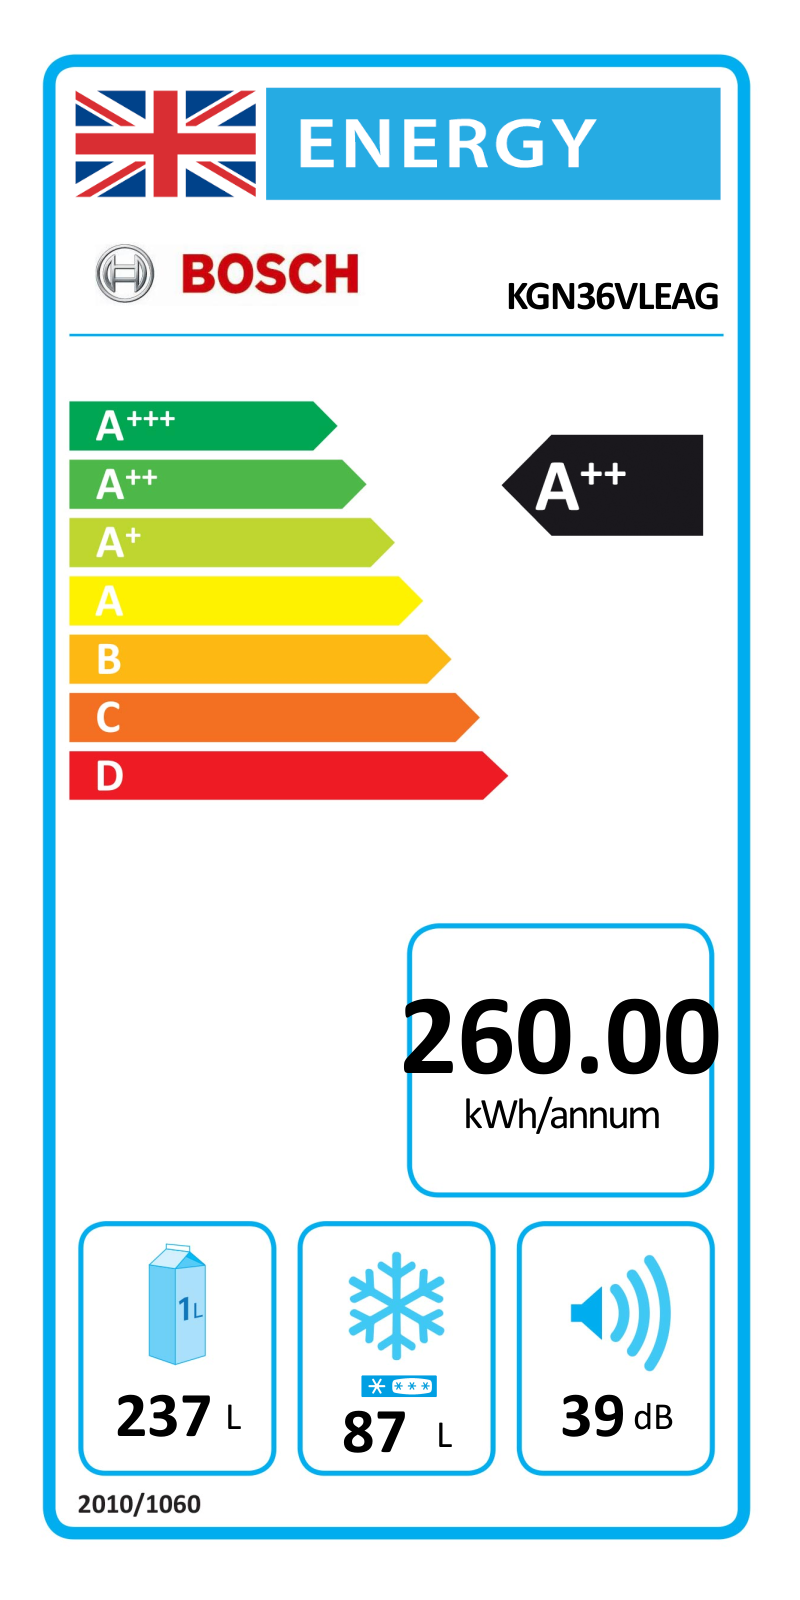 Bosch KGN36VLEAG EU Energy Label